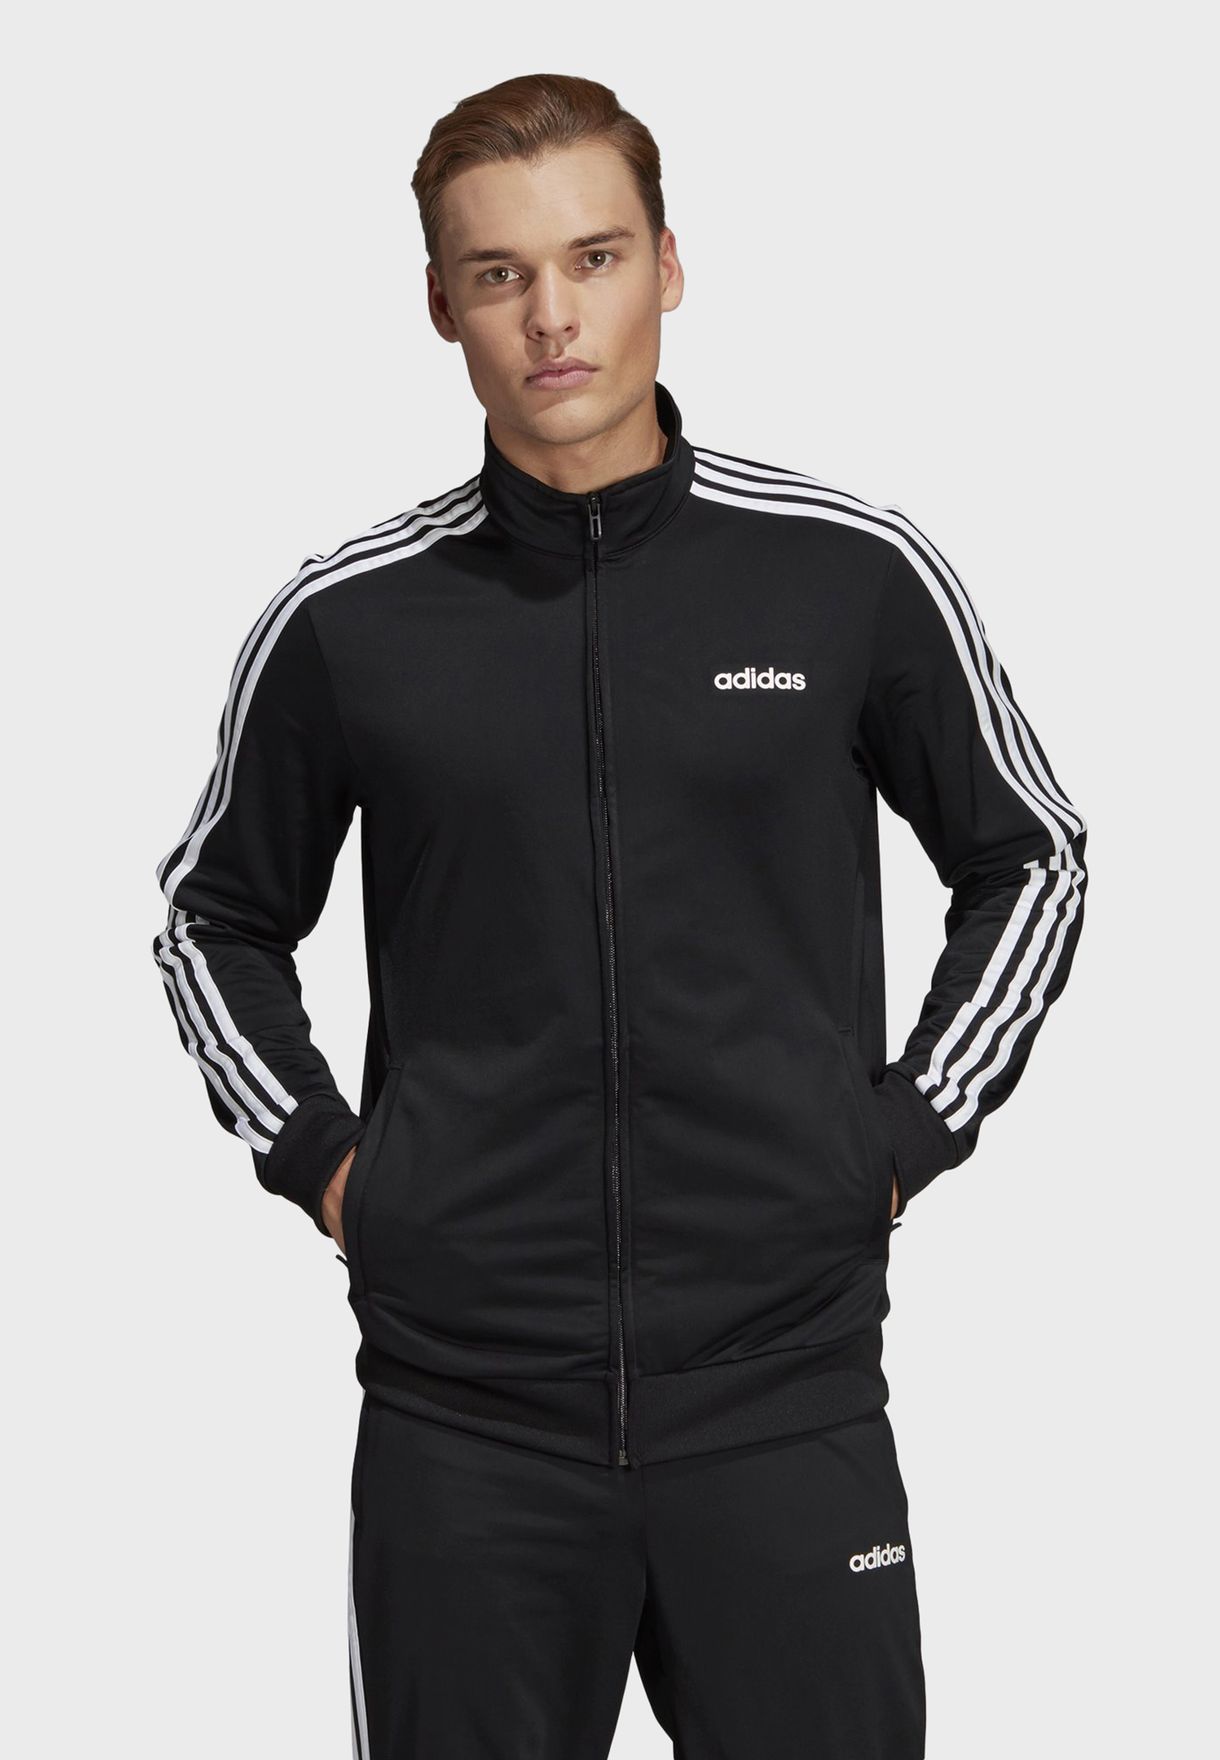 adidas black track jacket mens